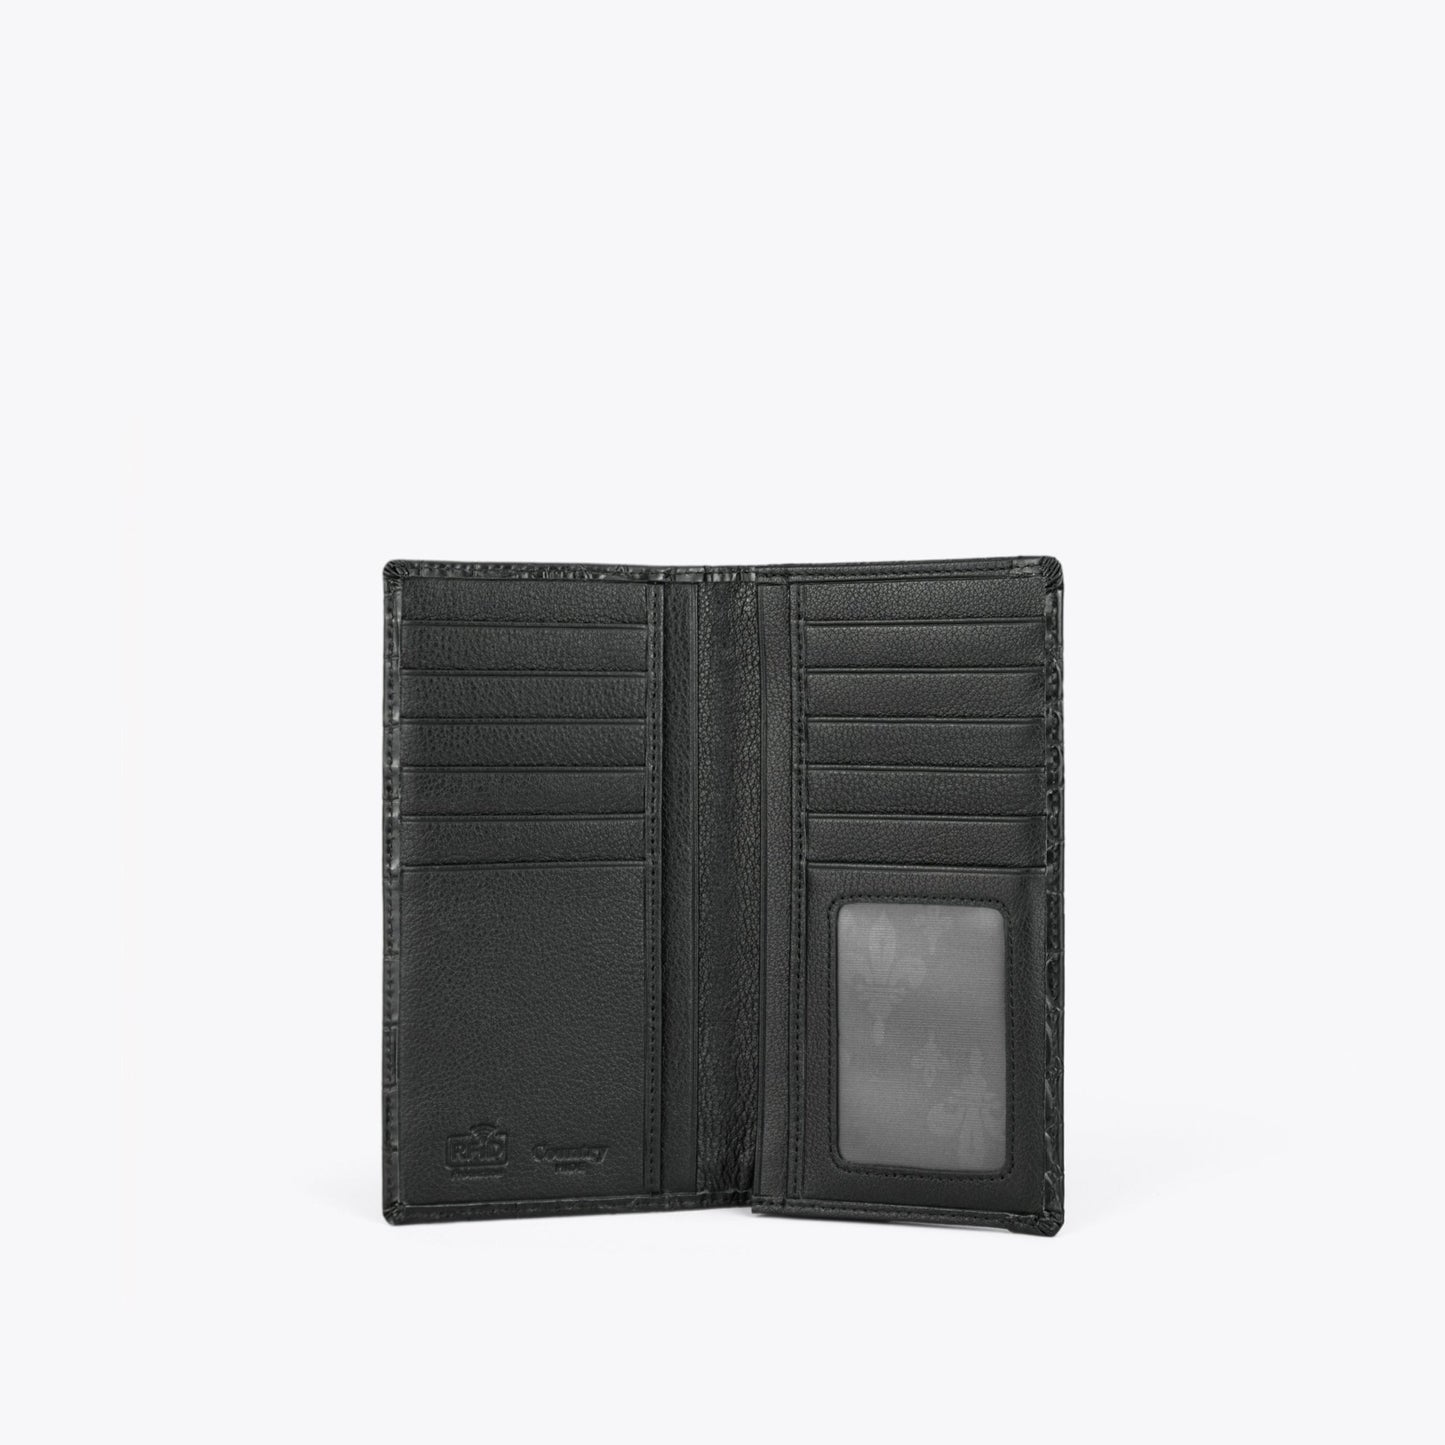 GAEUL Coat Wallet - Black Croc (Matte Inner) - www.countryhide.com